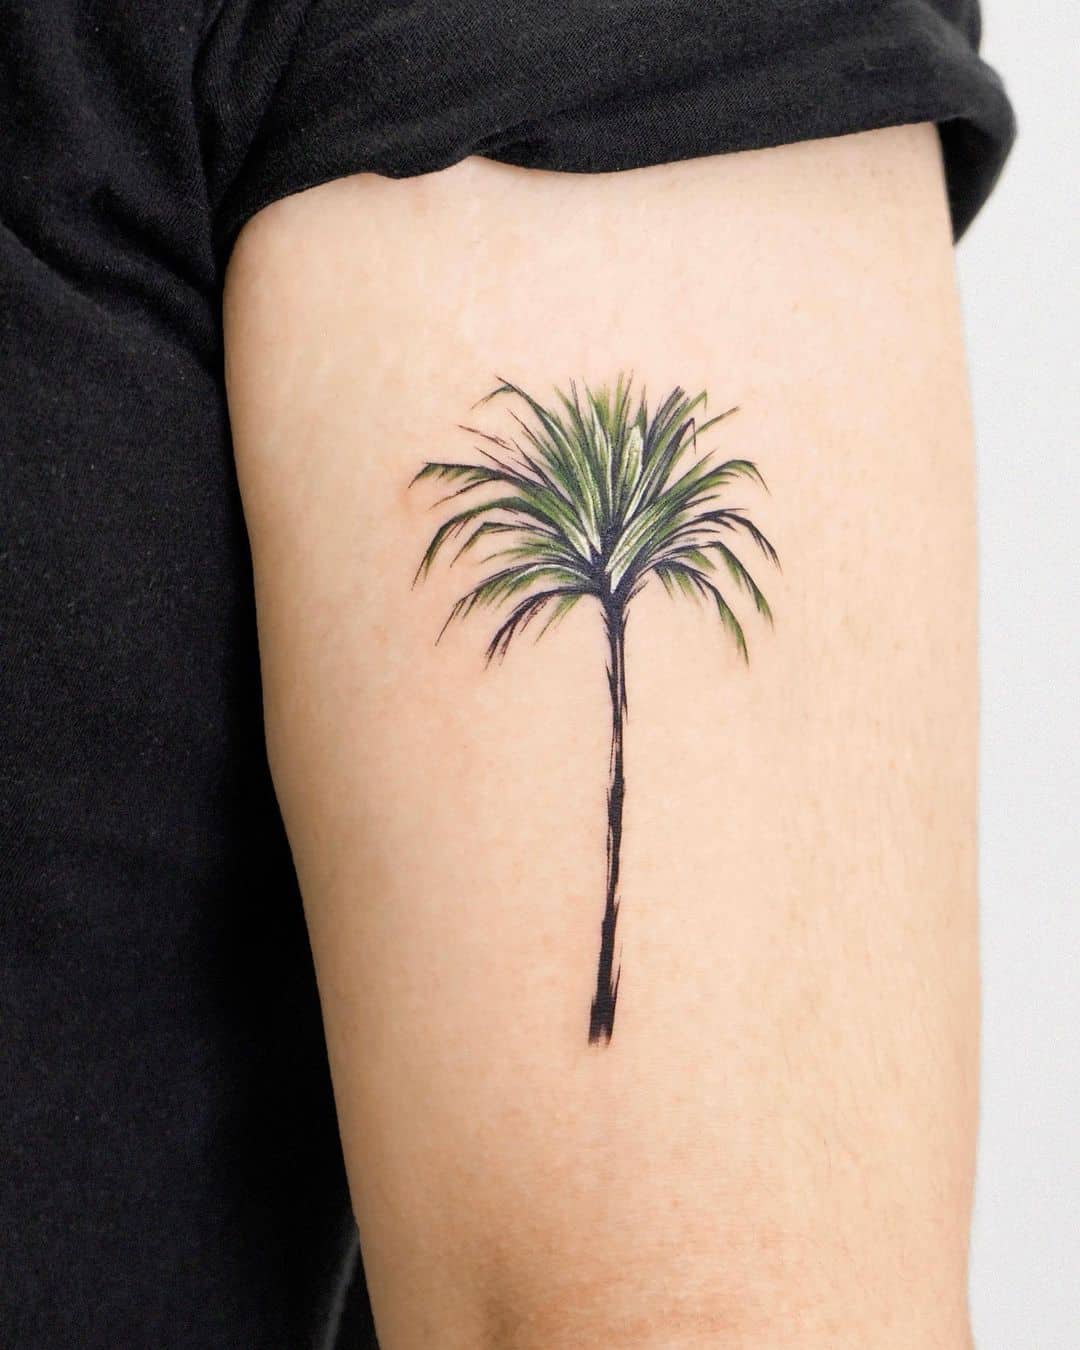 Palm tree tattoo by tattooist zela